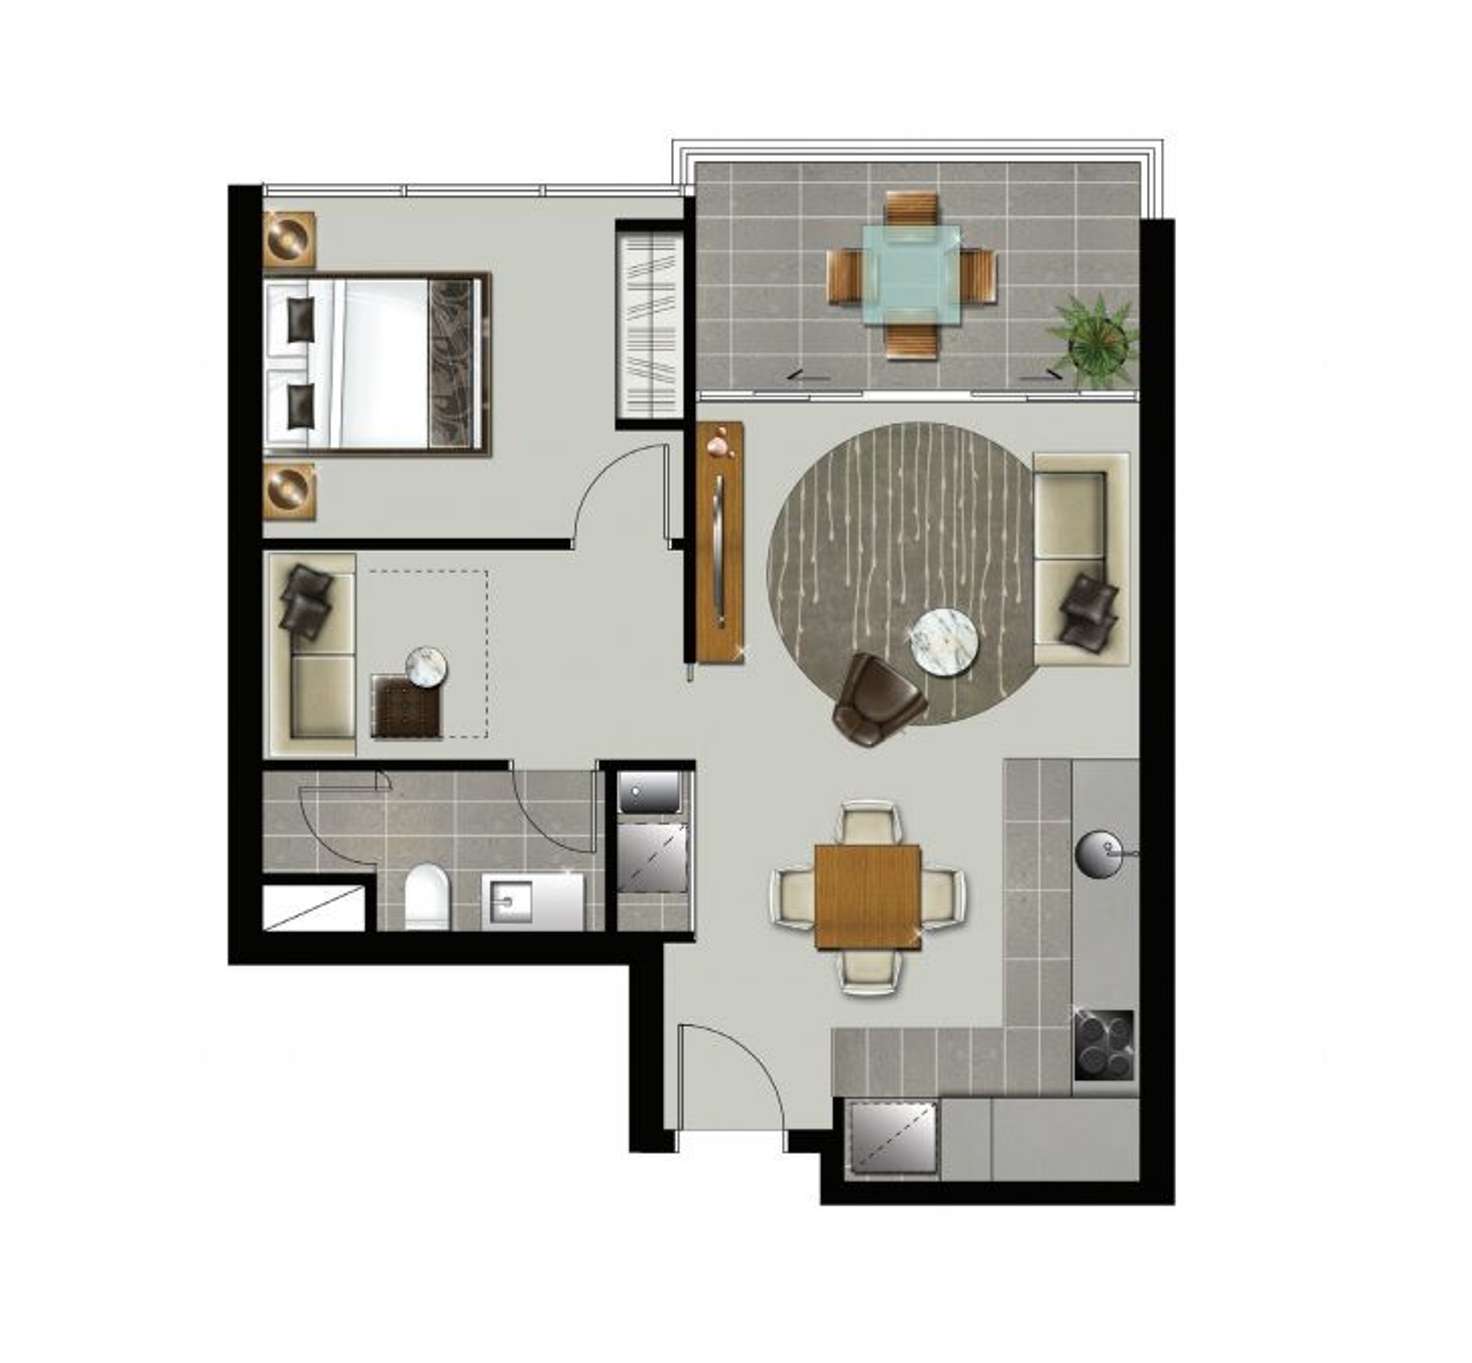 Floorplan of Homely apartment listing, 2802/55 Railway Terrace, Milton QLD 4064